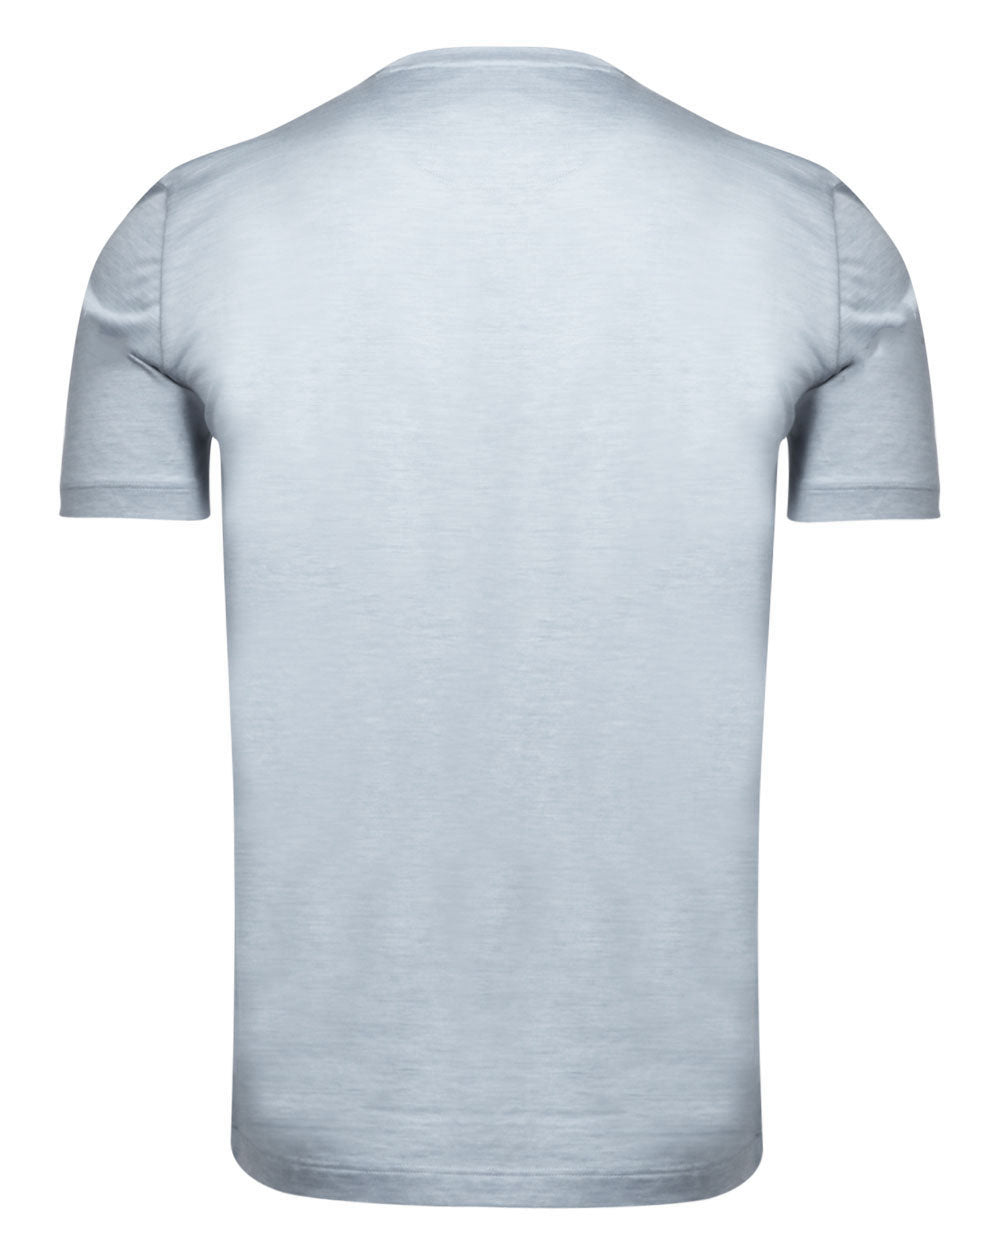 Pearl Grey Short Sleeve Shirt